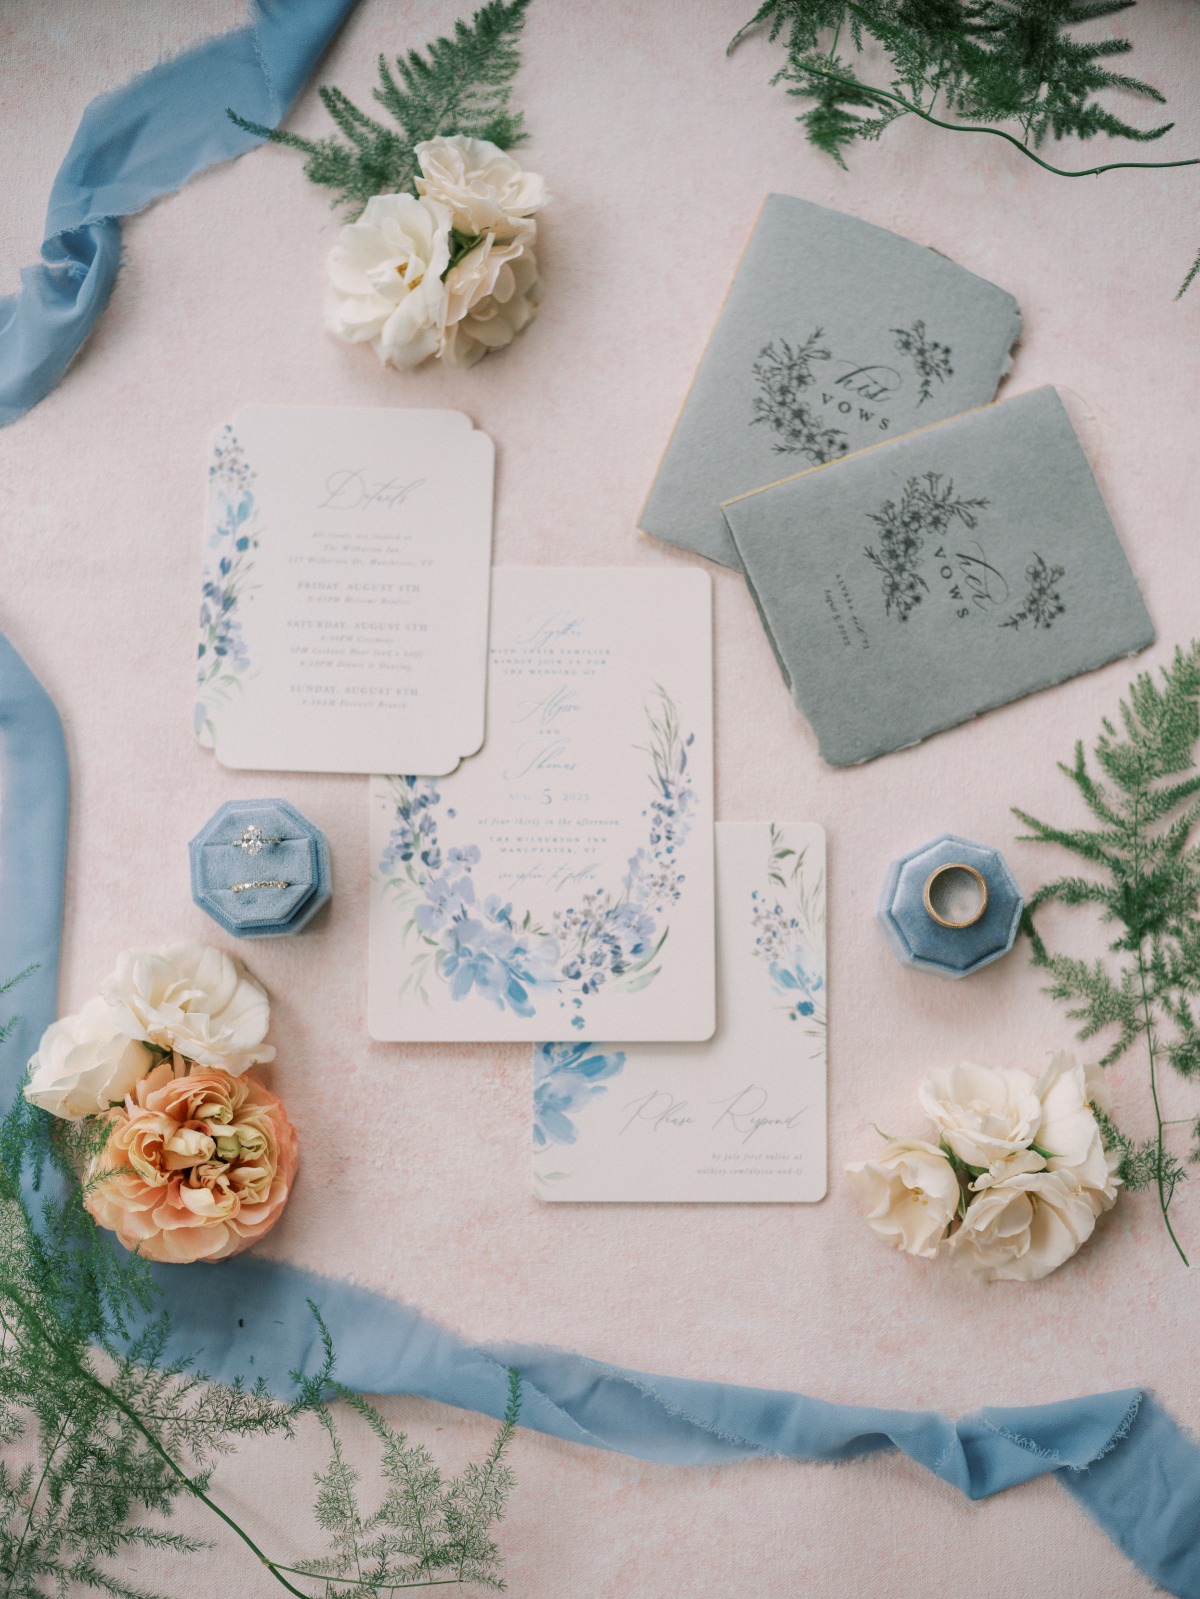 Elegant something blue wedding invitations and vow books